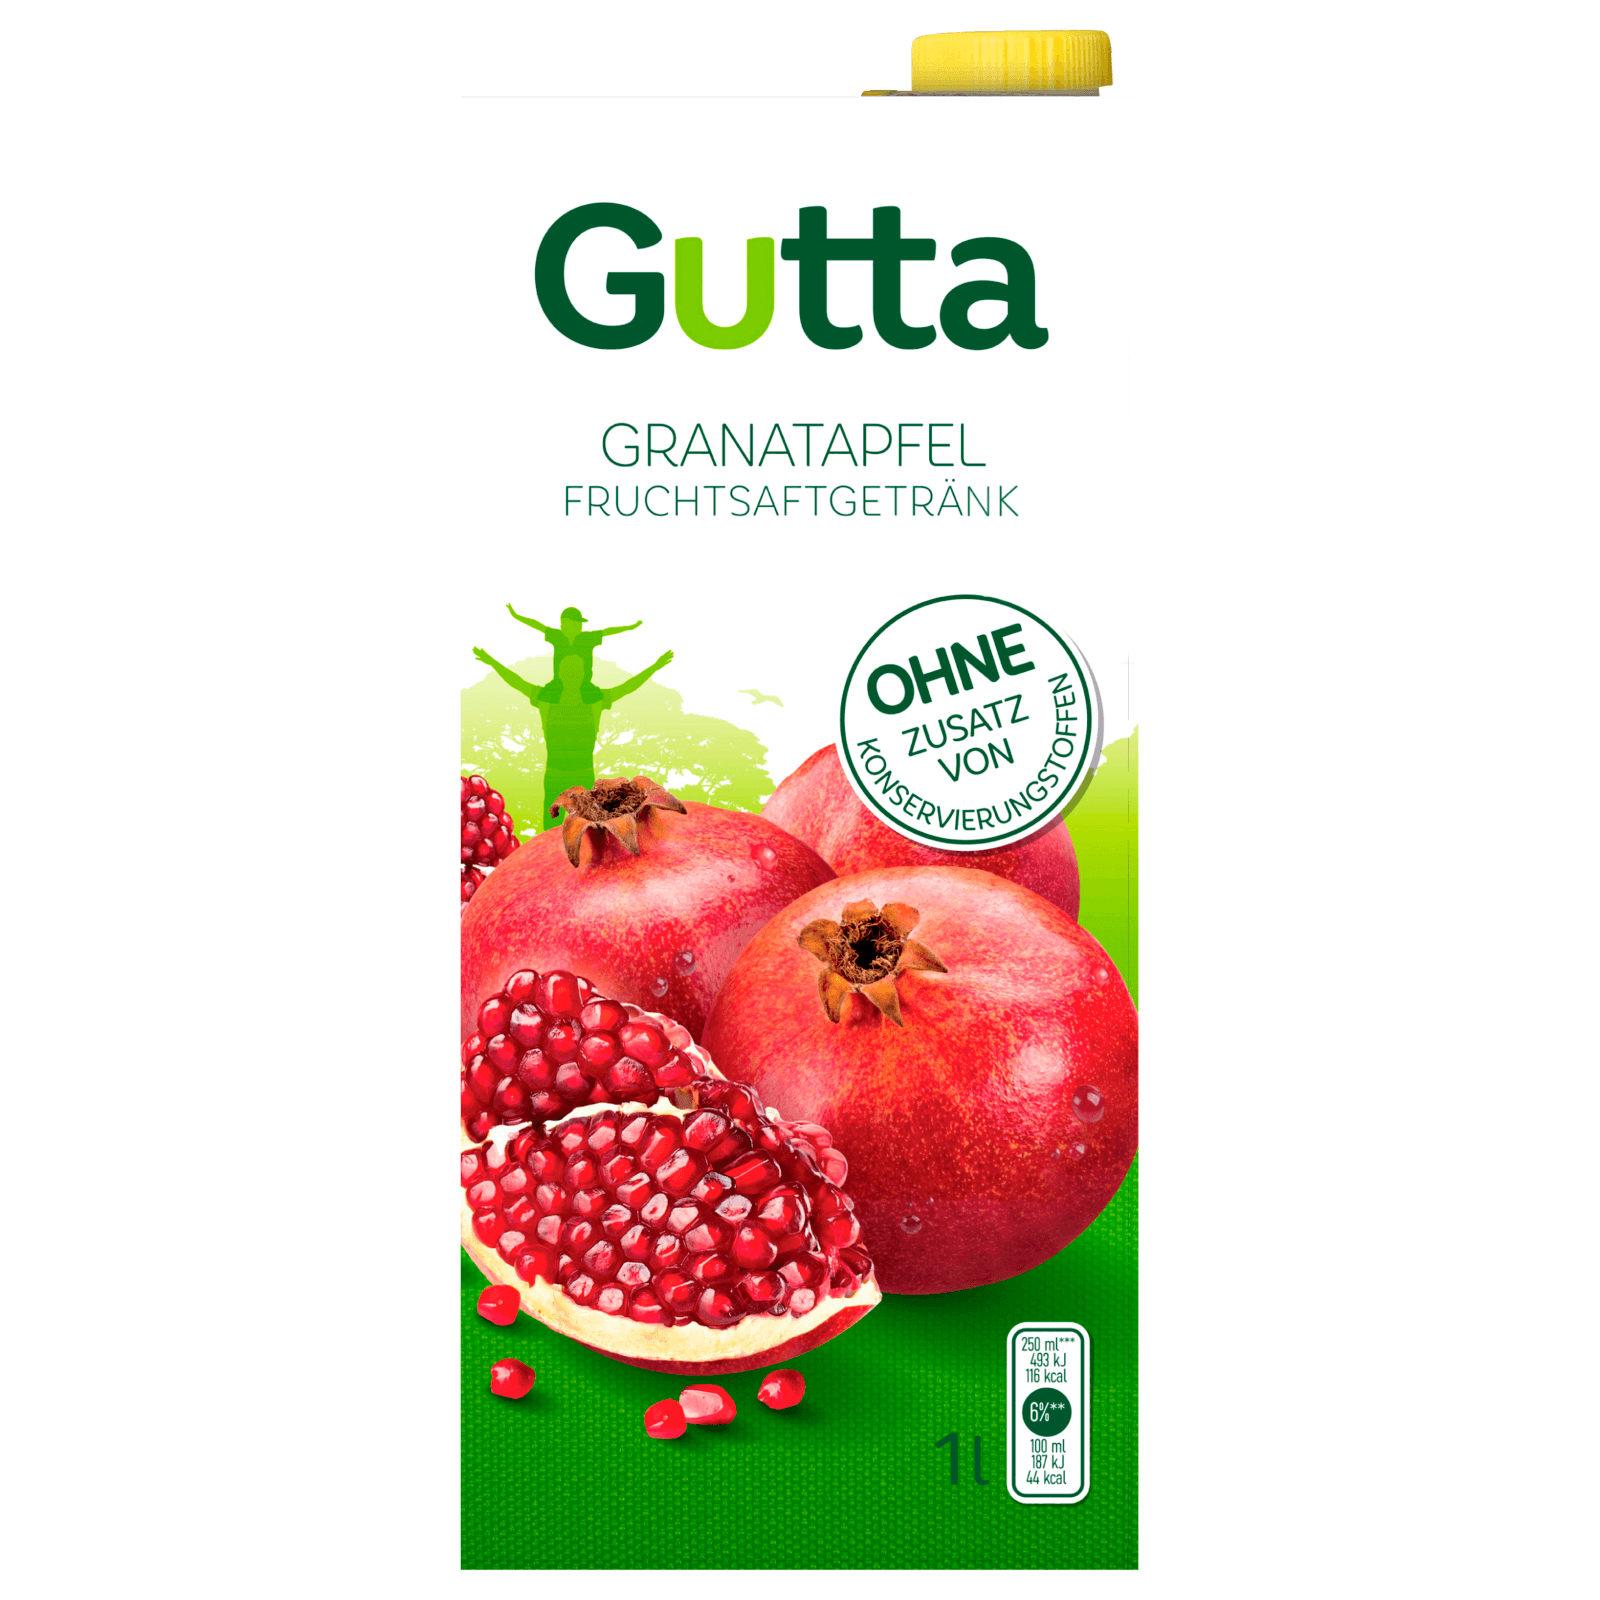 Gutta Granatapfel-Fruchtsaftgetränk 1l bei REWE online bestellen!